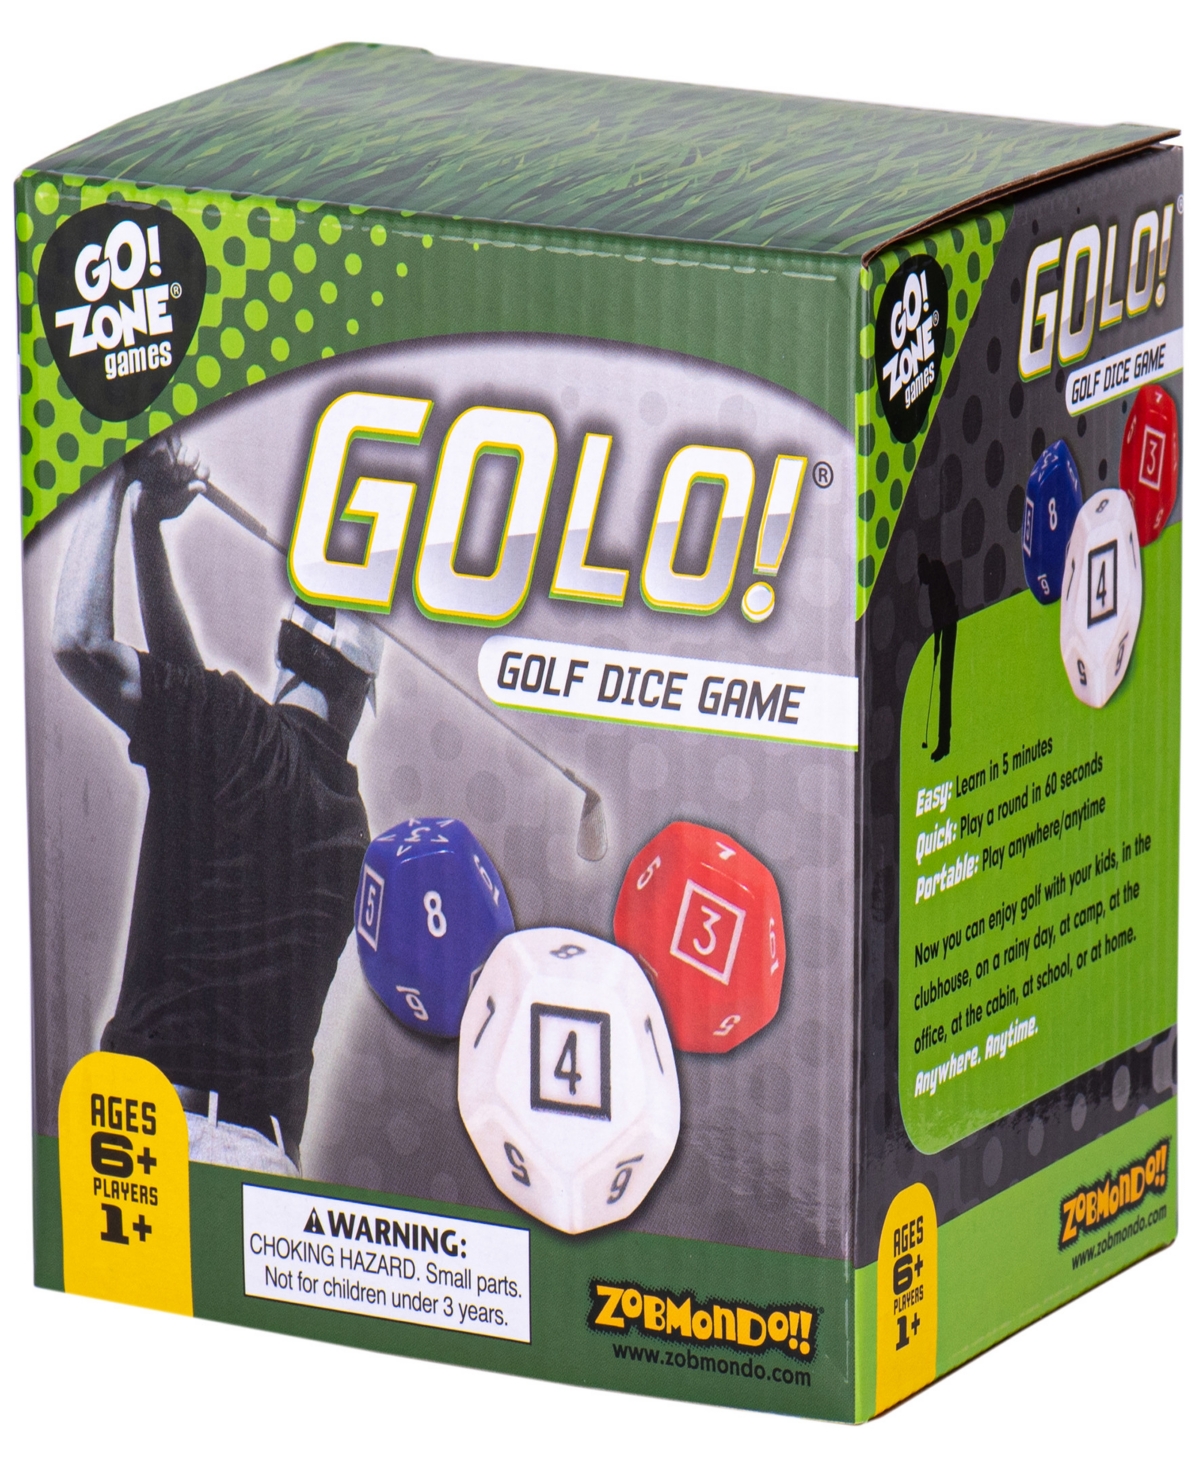 Zobmondo Kids' Golo Golf Dice Game Award Winning Fun Game For Home Or Travel In Multi